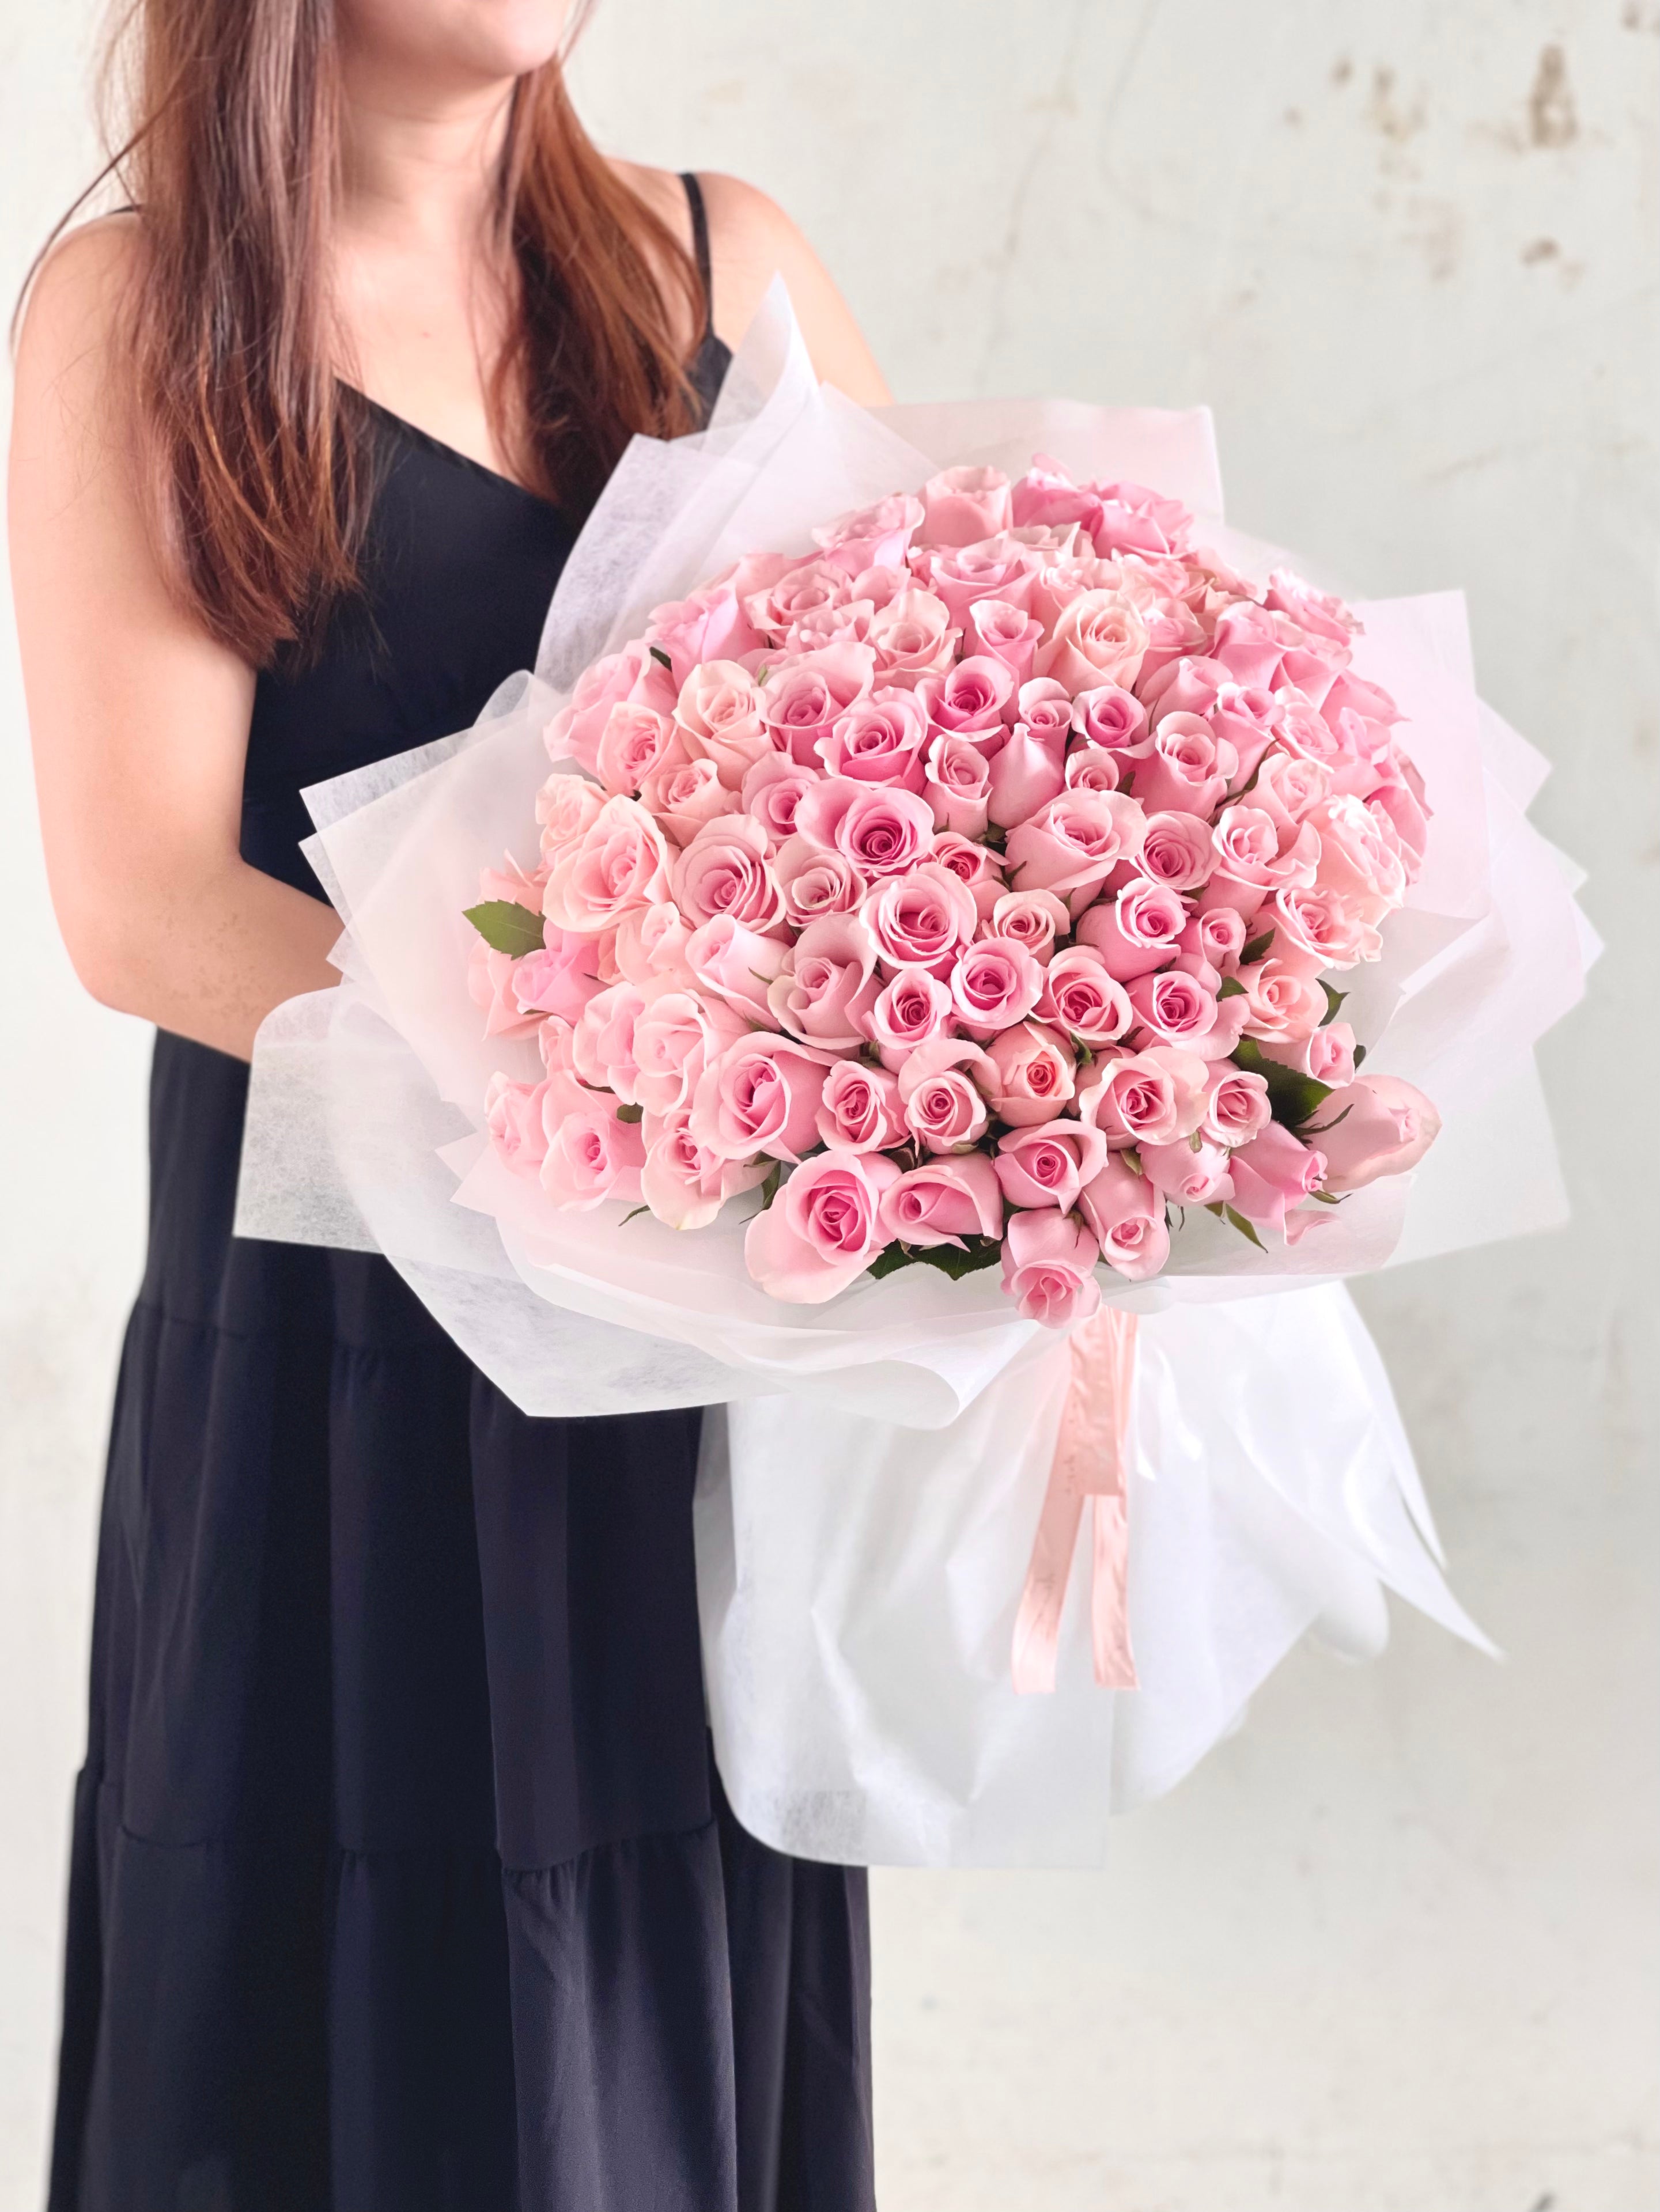 99 Roses Bouquet - Pink - Flower - Preserved Flowers & Fresh Flower Florist Gift Store